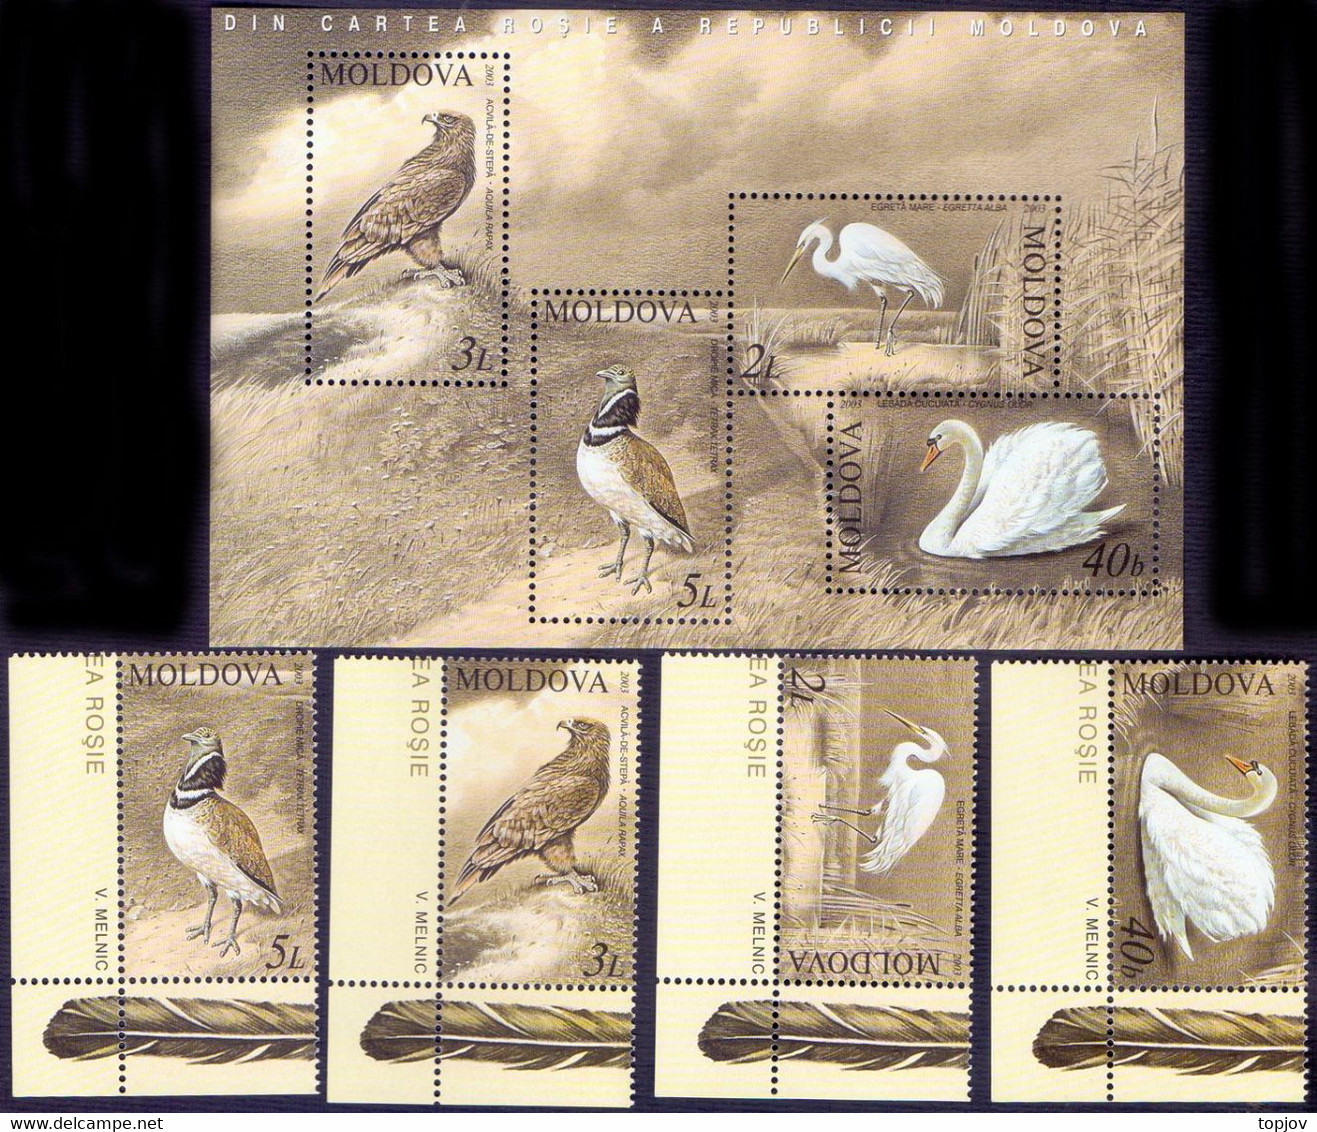 MOLDOVA - BIRDS - DUCK - EAGLE - **MNH - 2003 - Swans